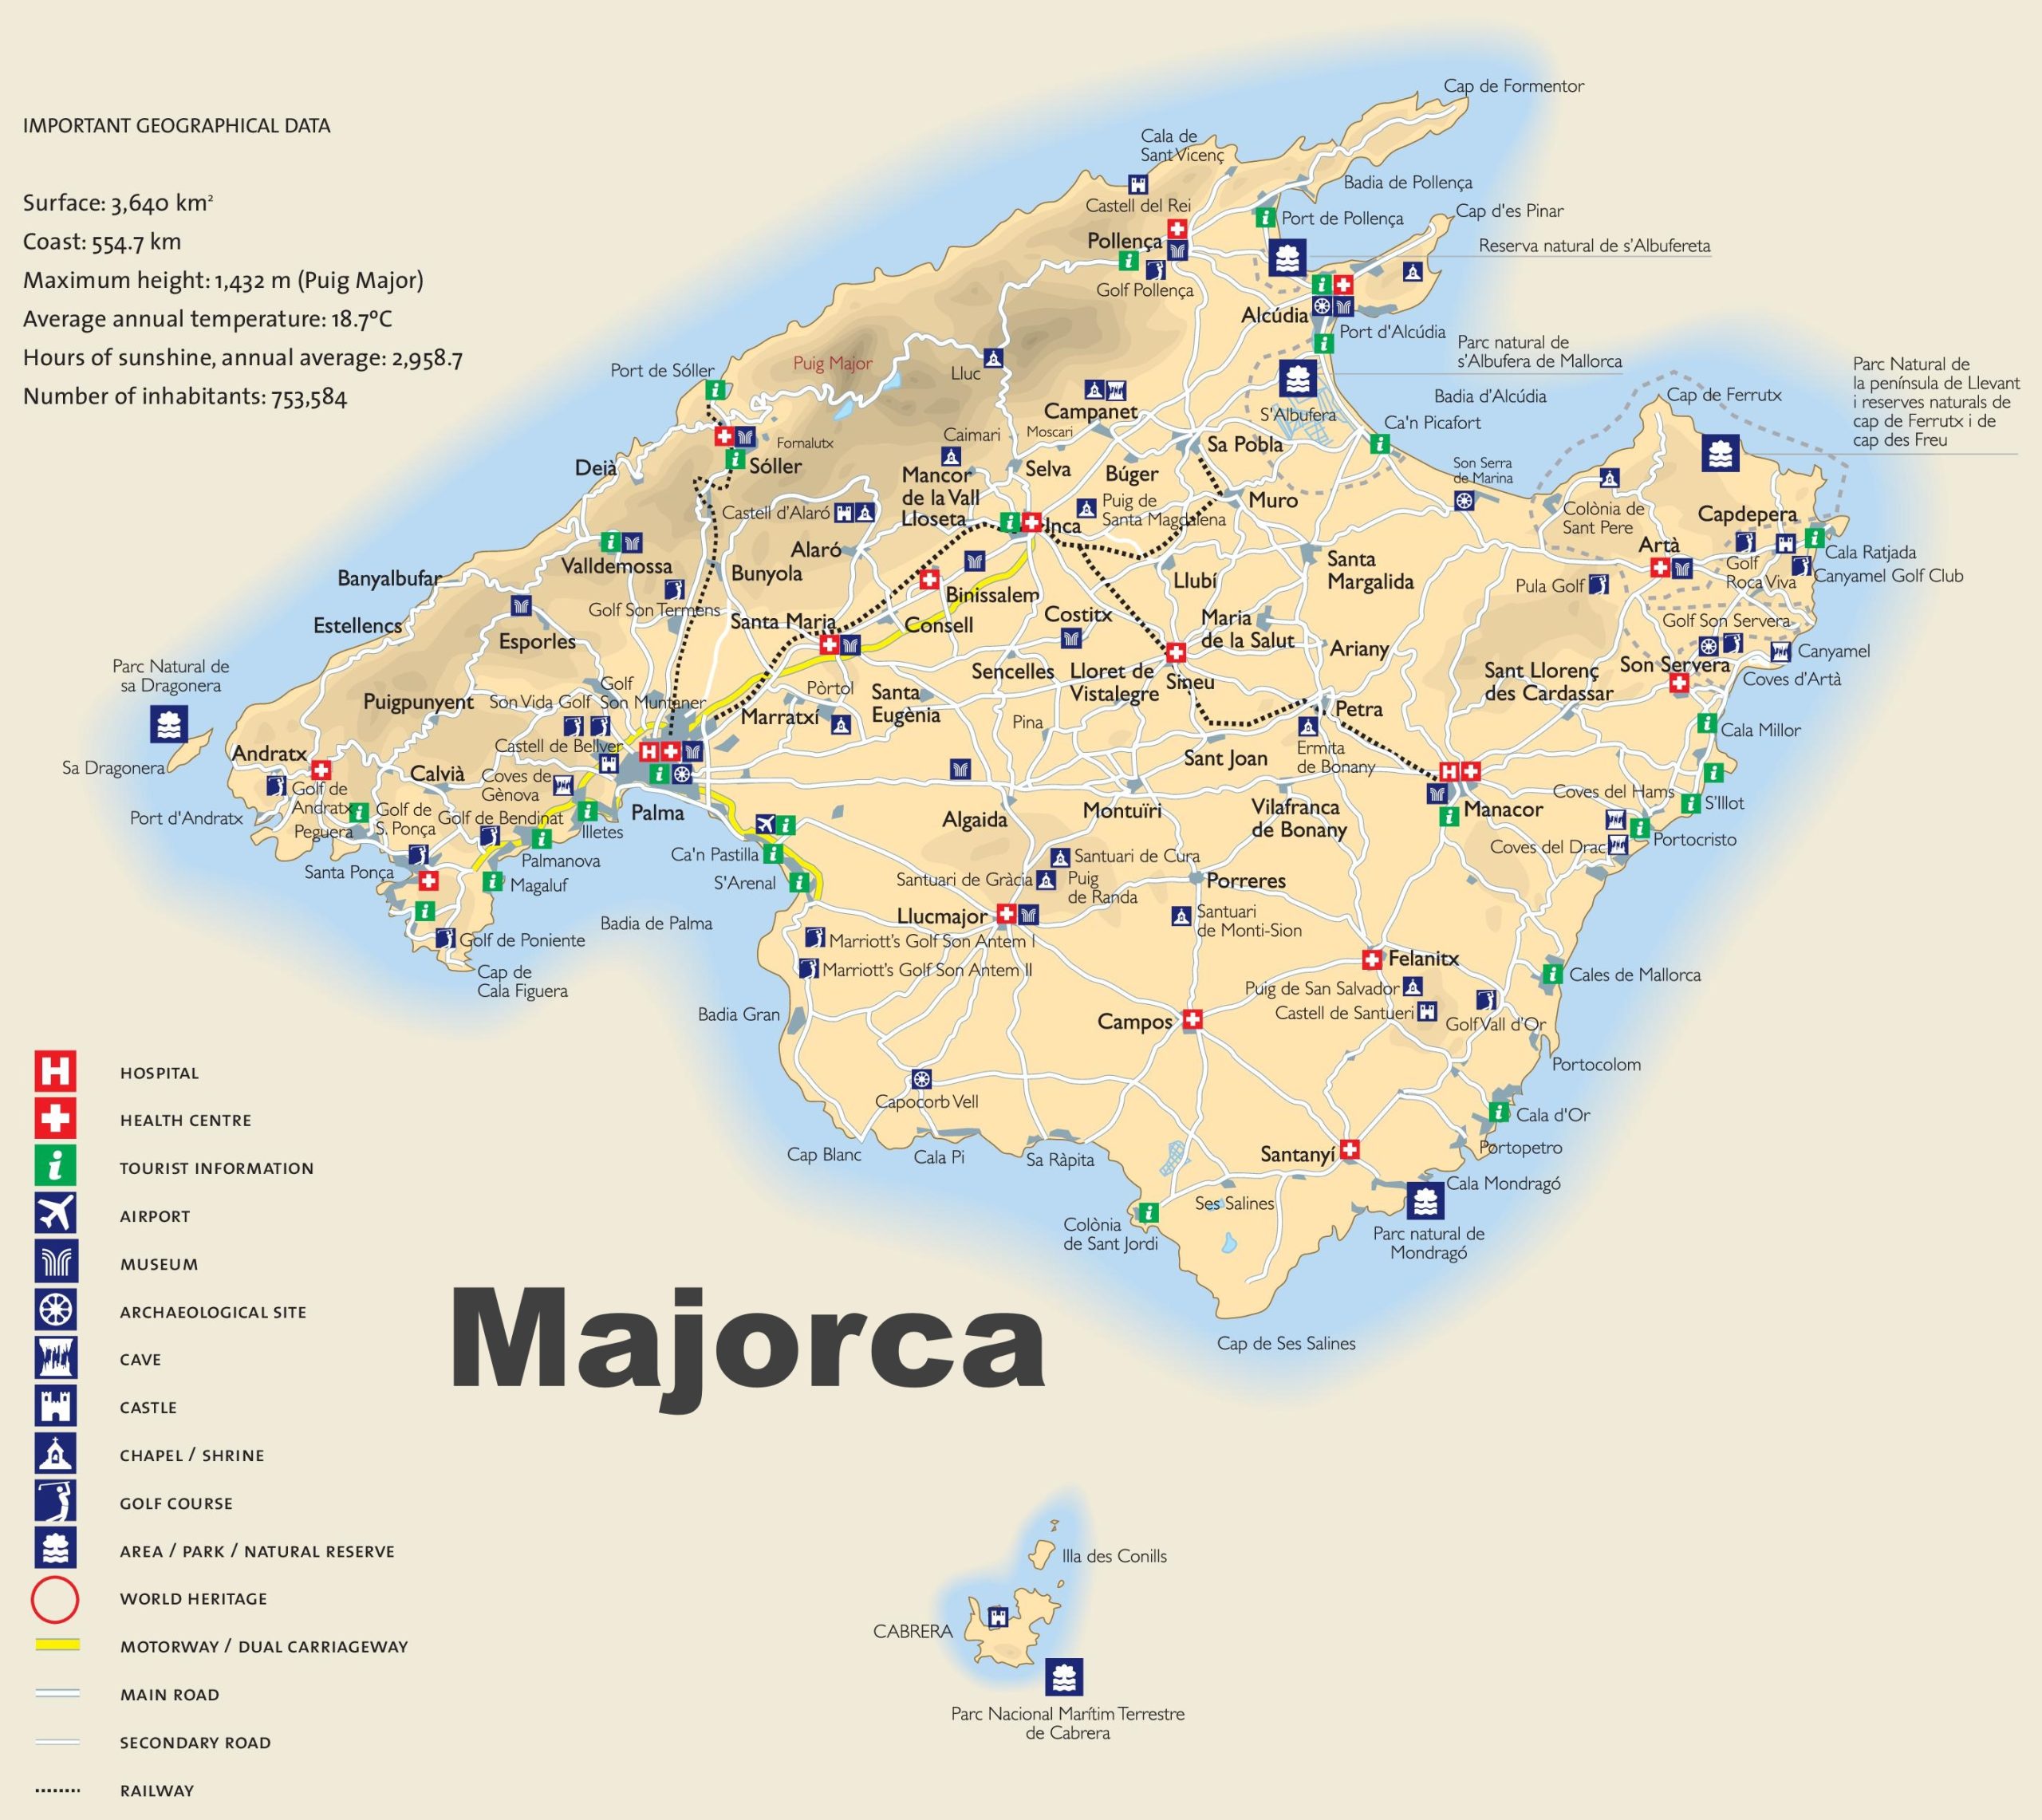 majorca tourist information office